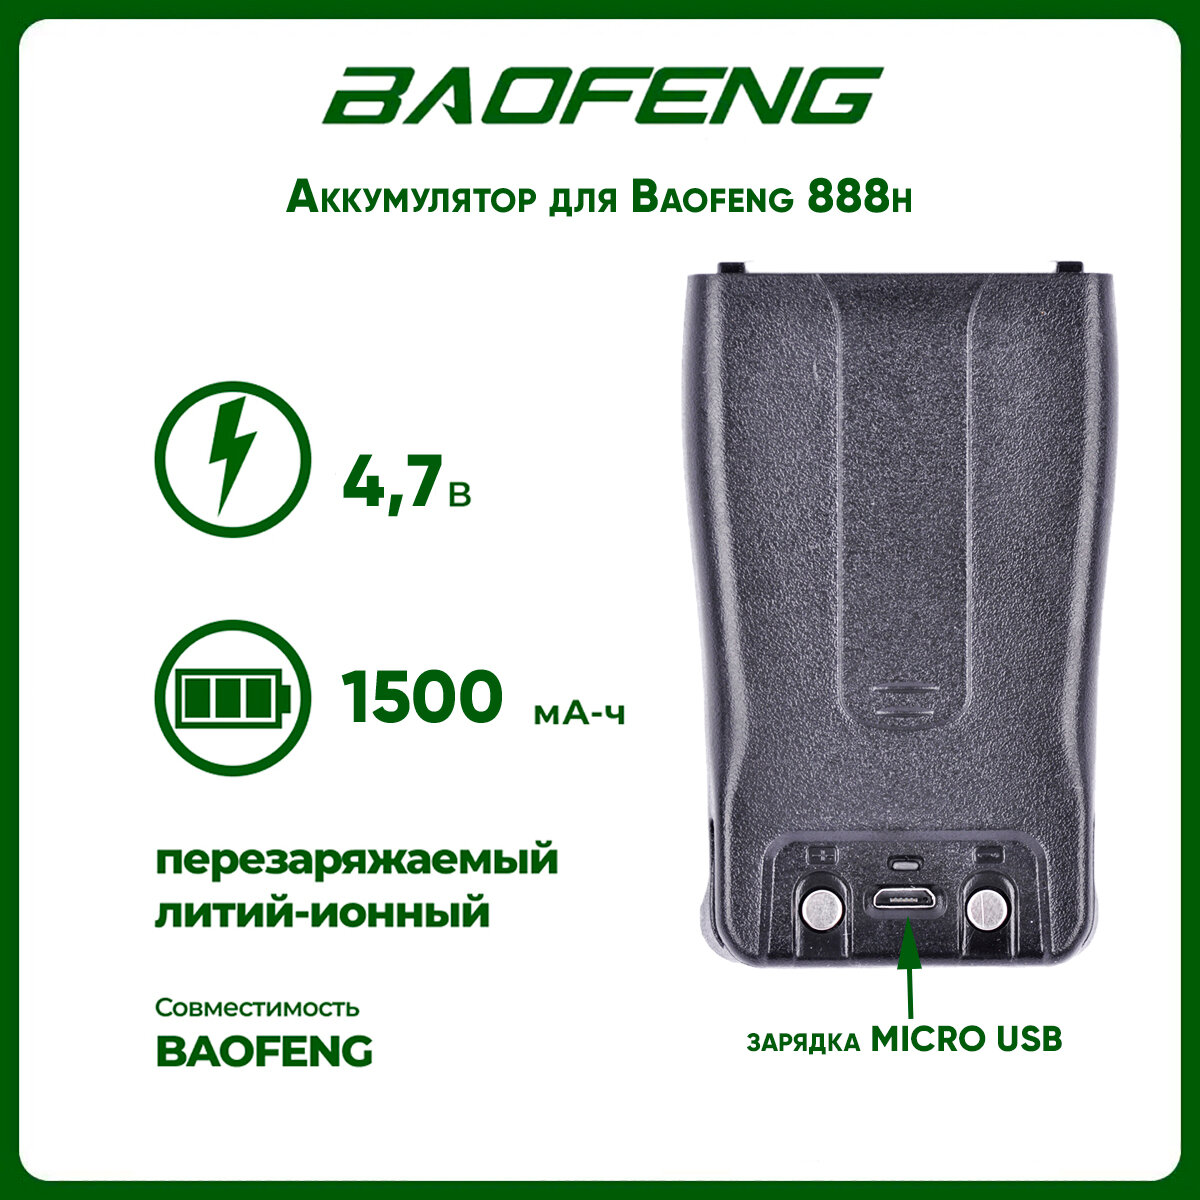 Аккумулятор для рации Baofeng 888h 1500 mAh